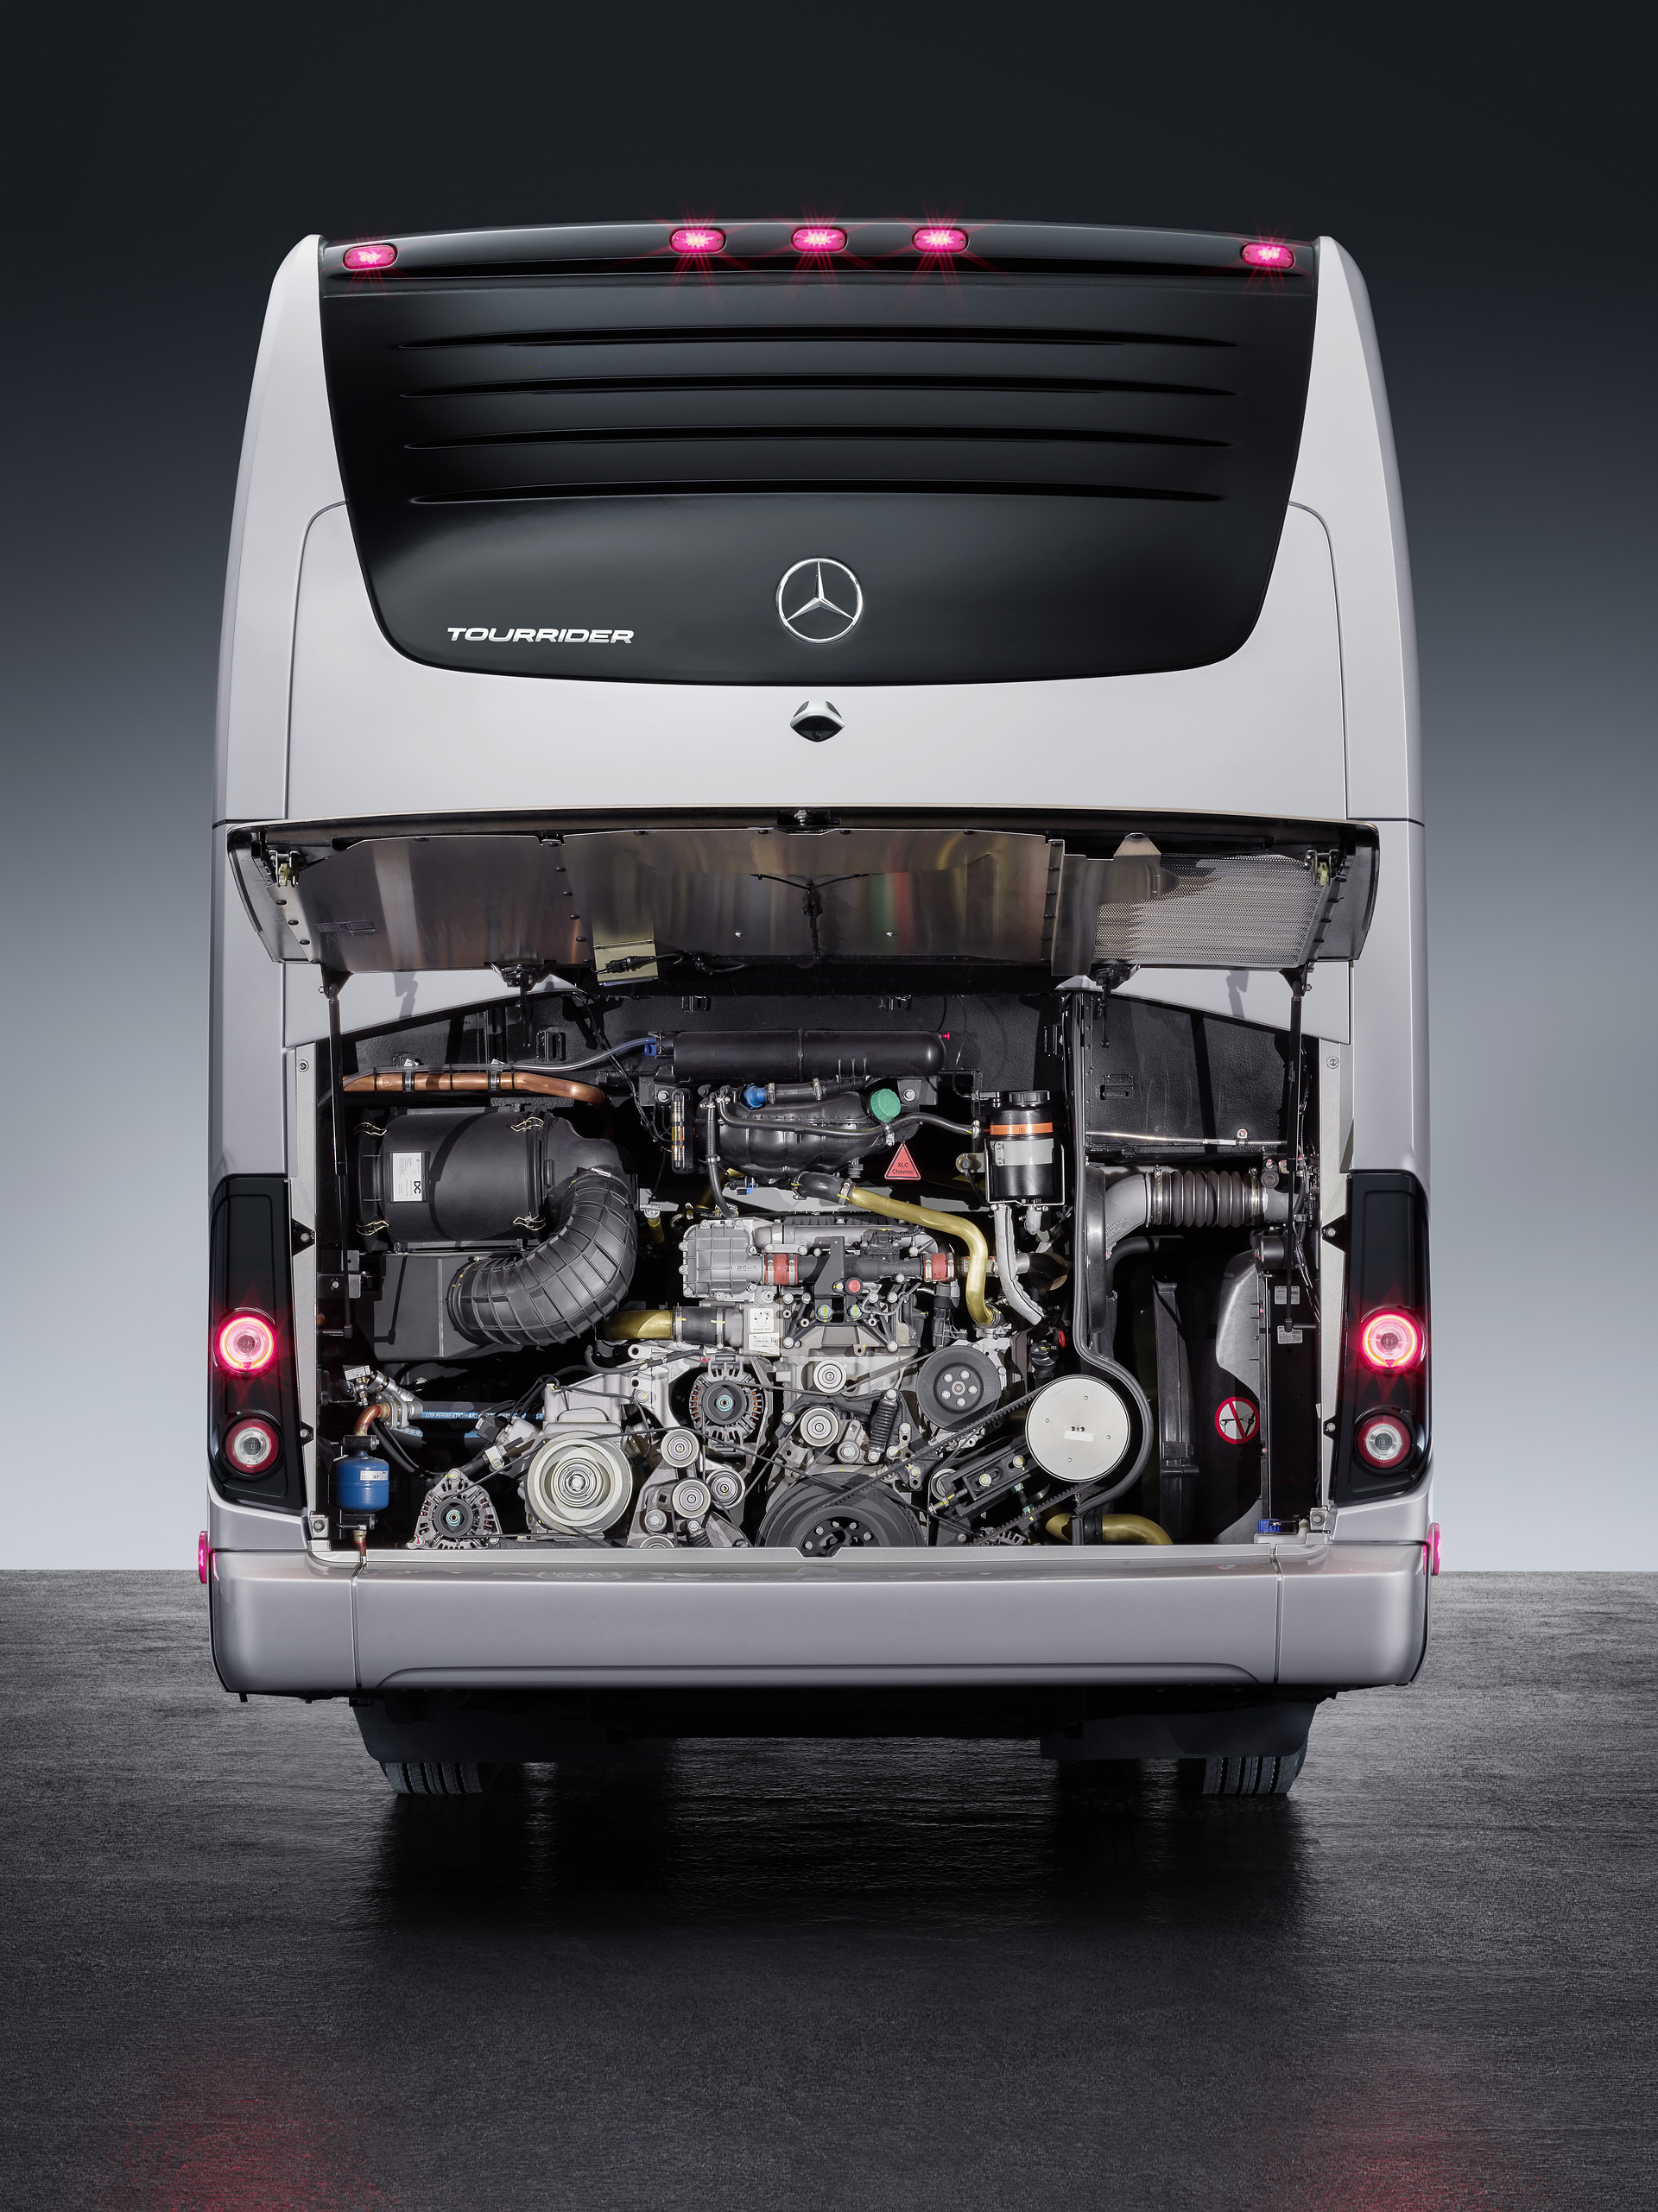 Mercedes-Benz Tourrider business